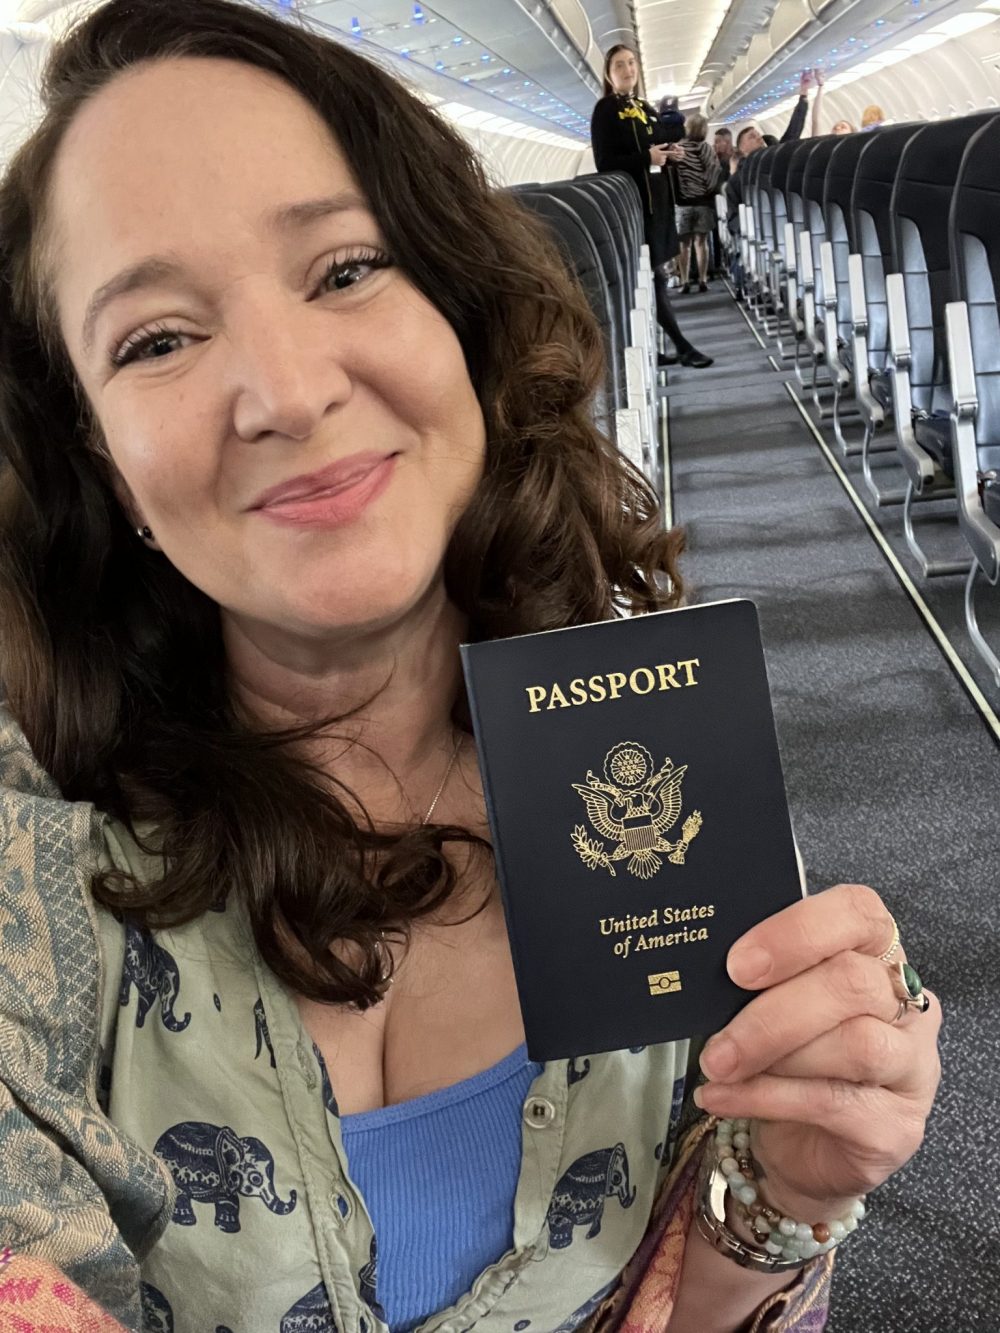 Jennifer holding a passport on a plane